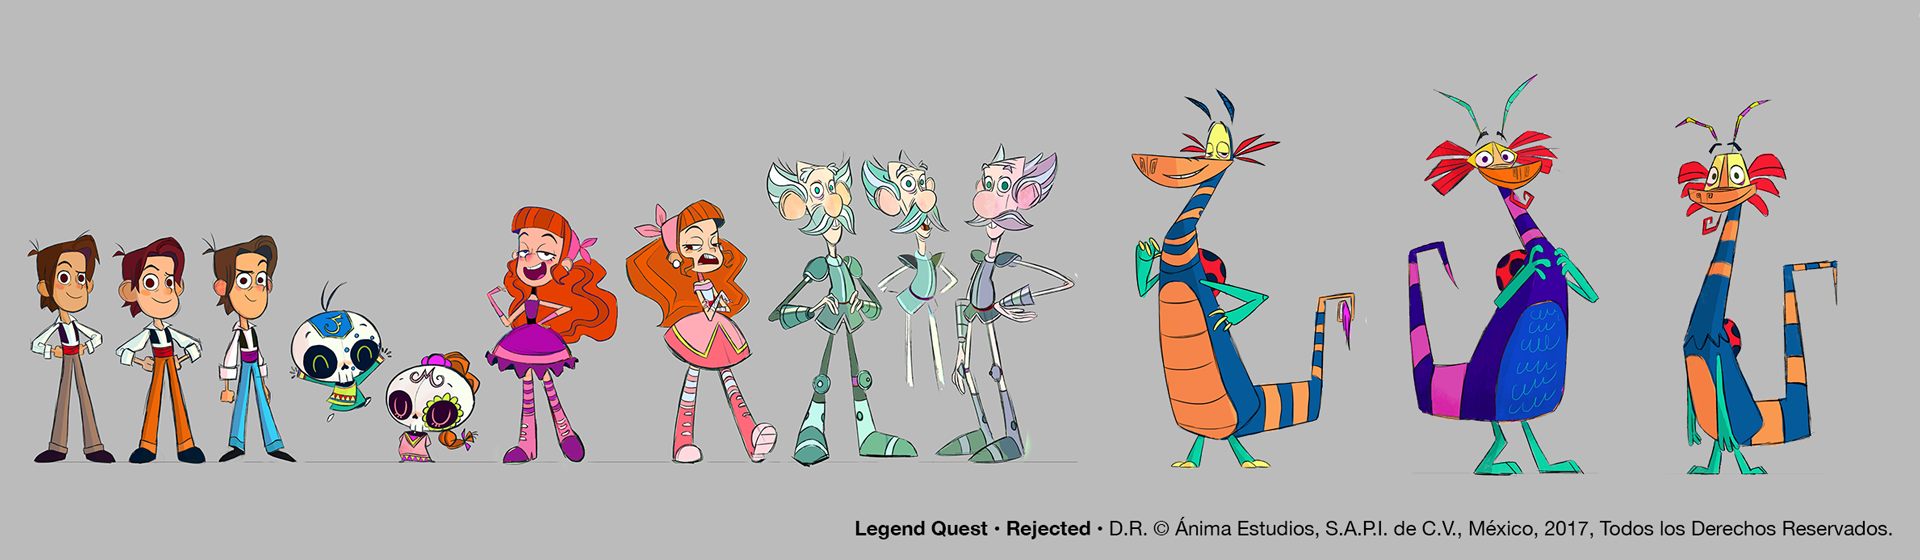 Legend Quest — VENTURIA | Animation Studio based in Colombia